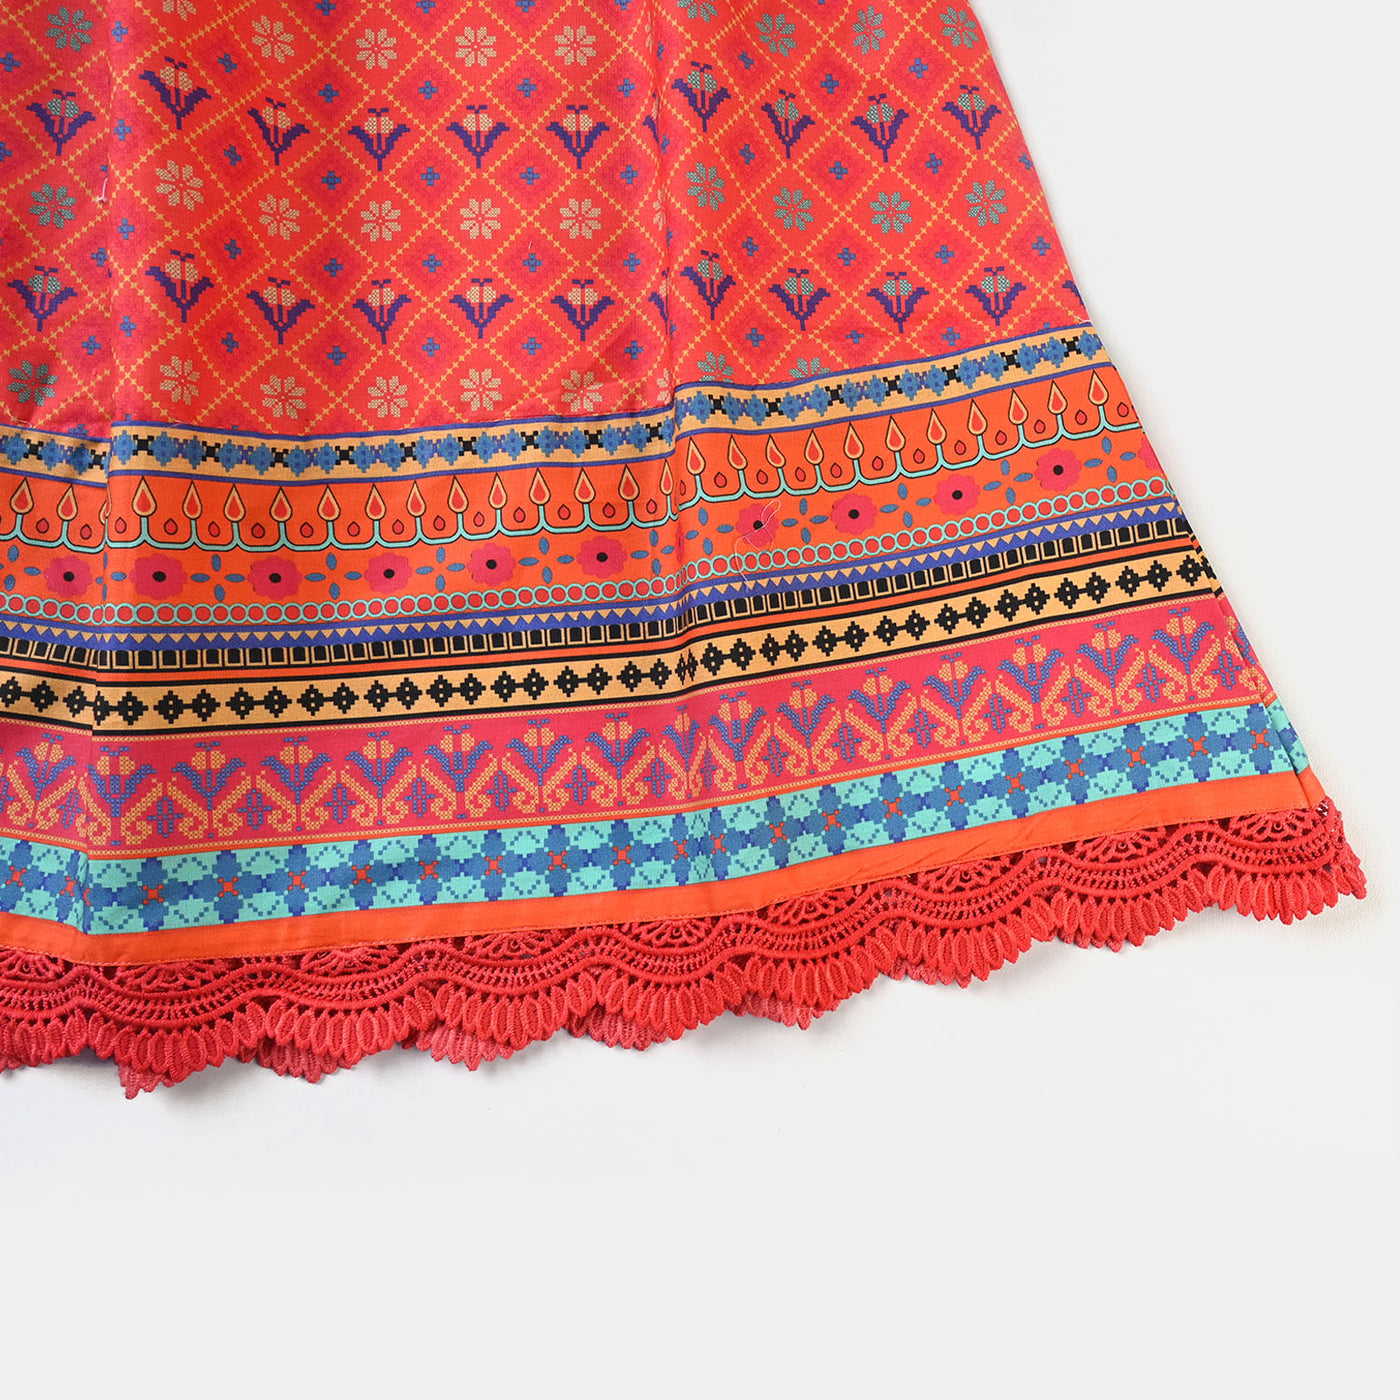 Girls Cotton Poplin Long Skirt Traditional Cross Stitch-Orange